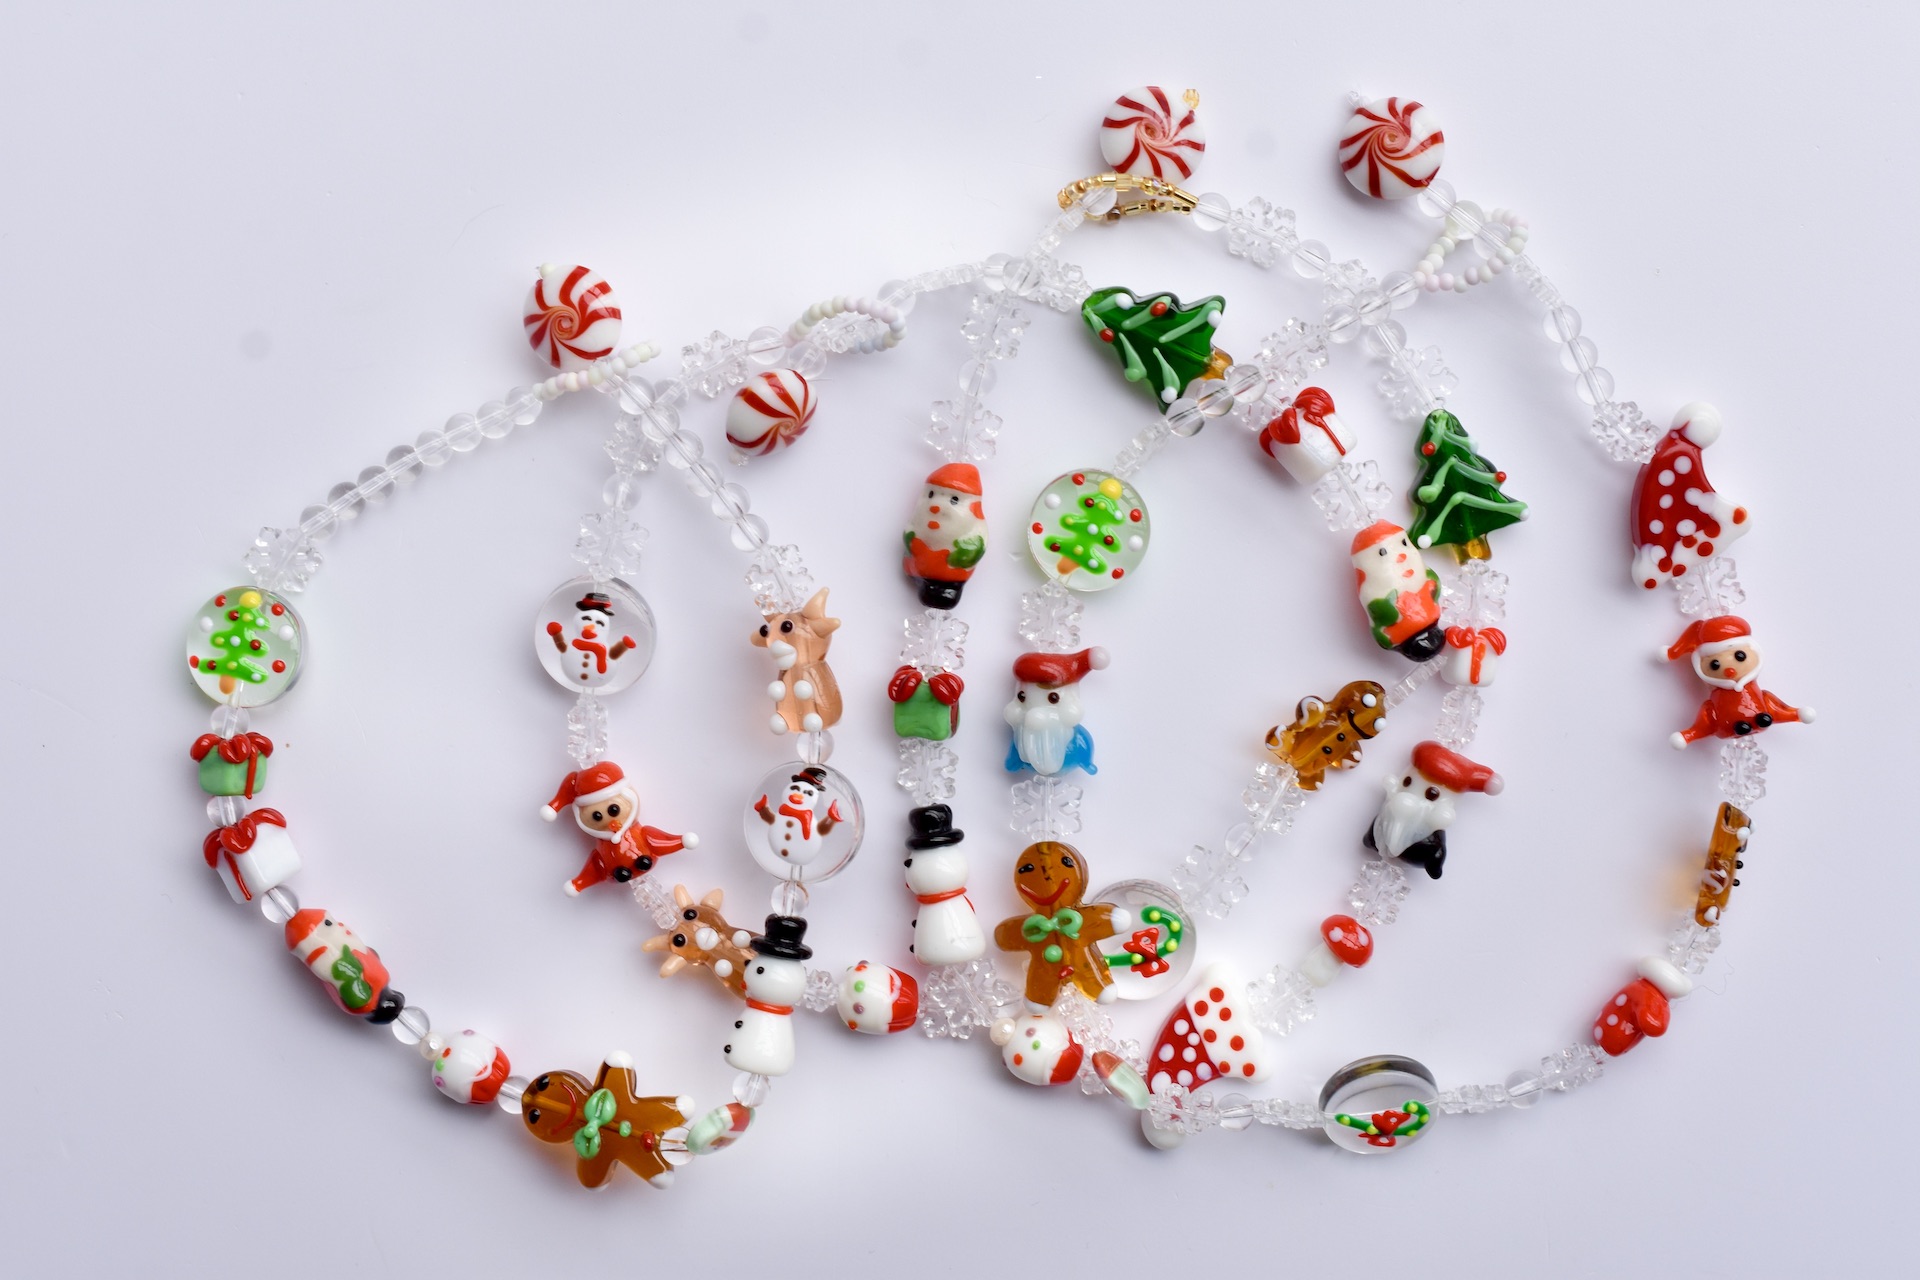 Christmas necklace choker handmade with glass beads